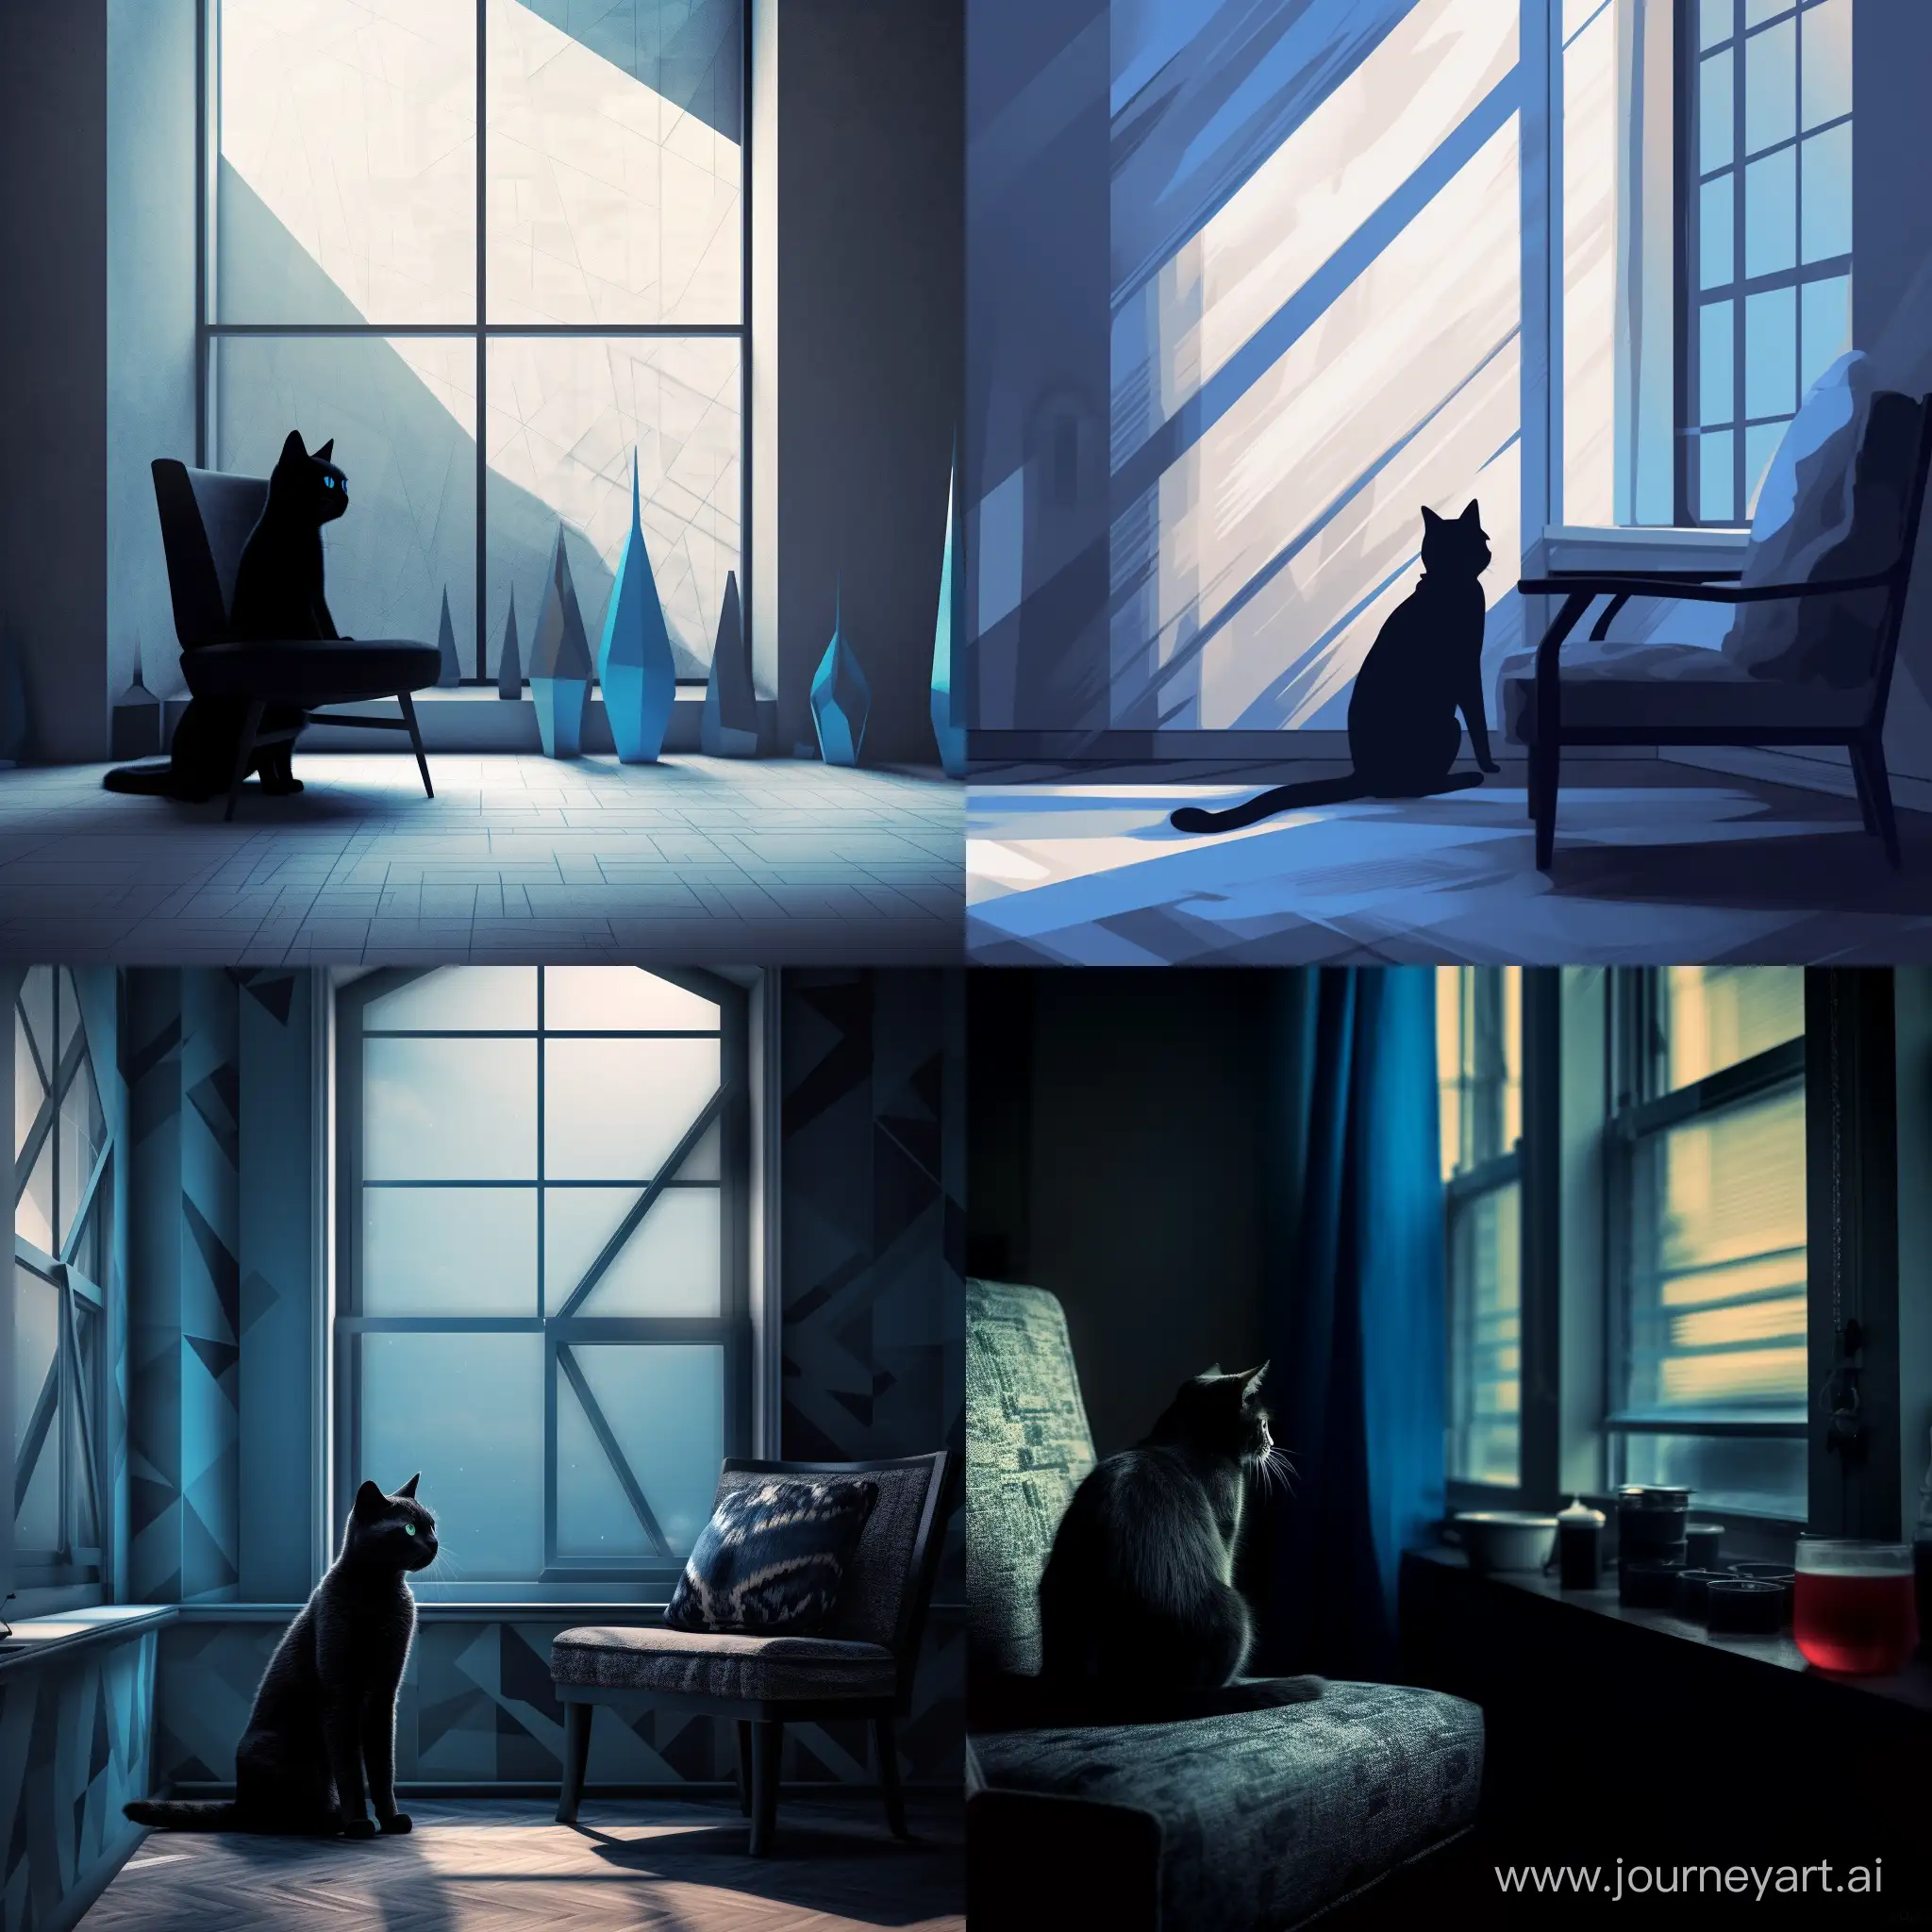 2D минимализм, голубая кошка с черными узорами лениво на фоне окна, мягкий свет проникает через окна отбрасывая блики на кошку